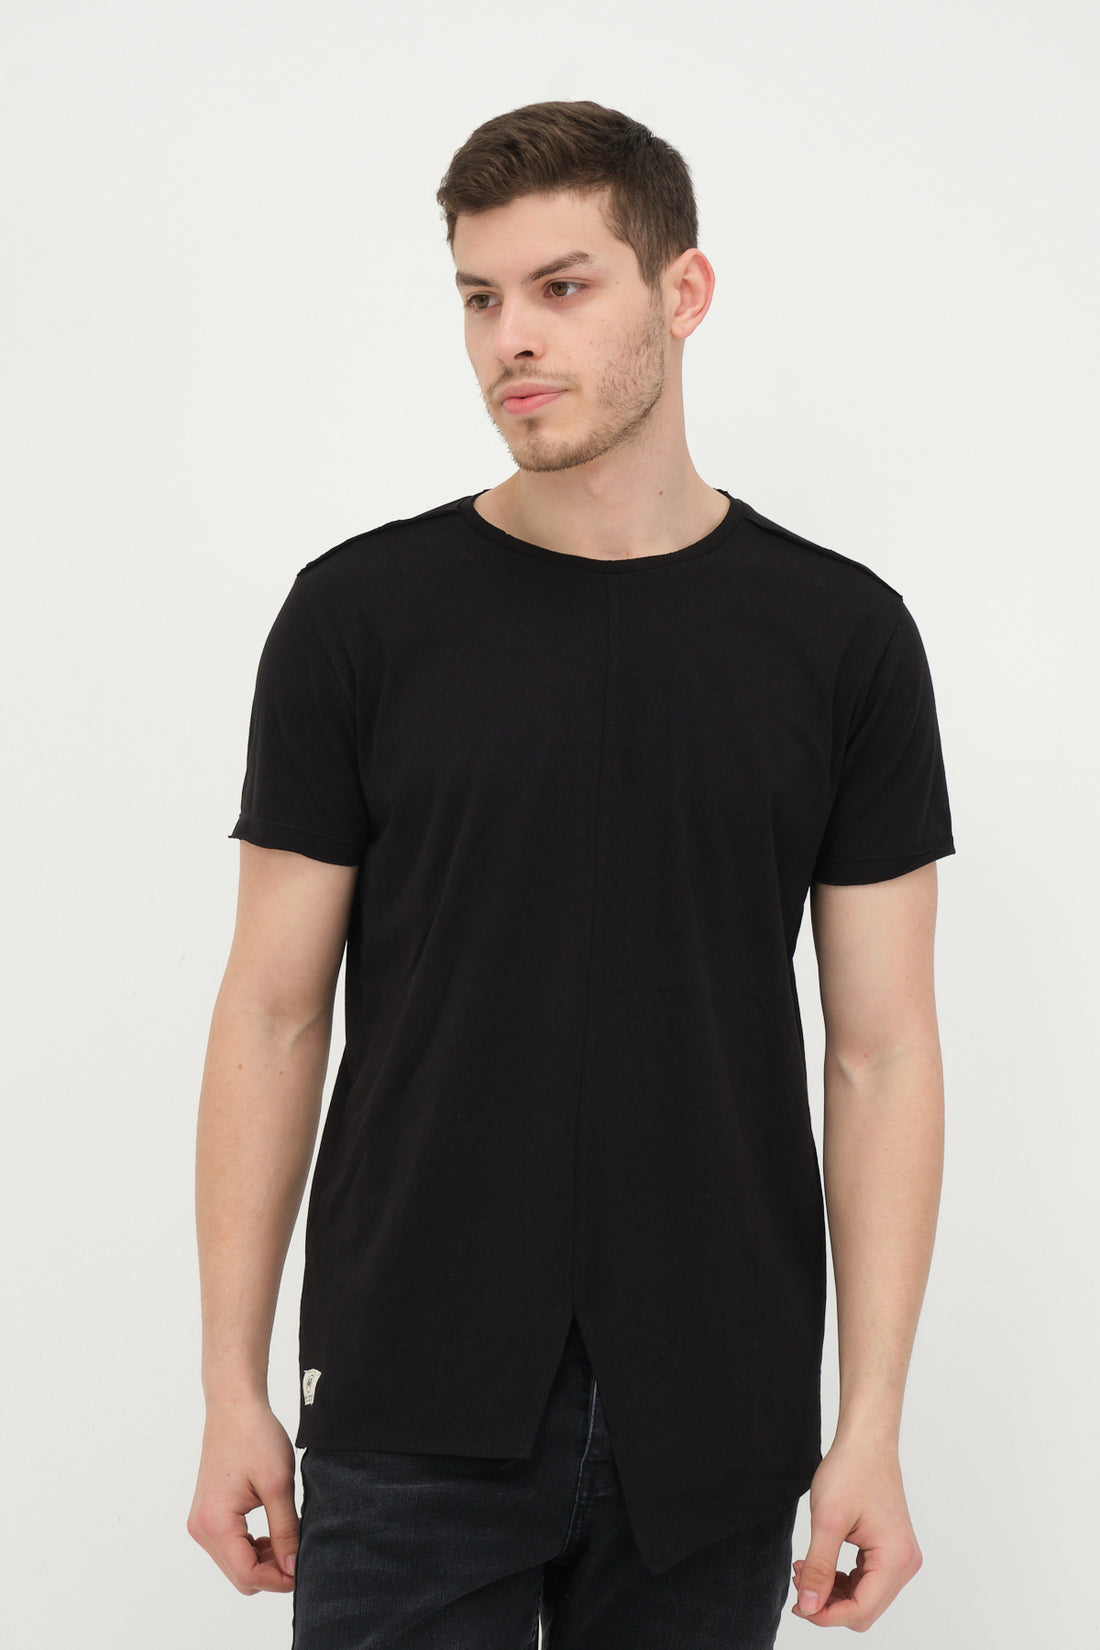 N° 8200 T-Shirt - Black - Ron Tomson